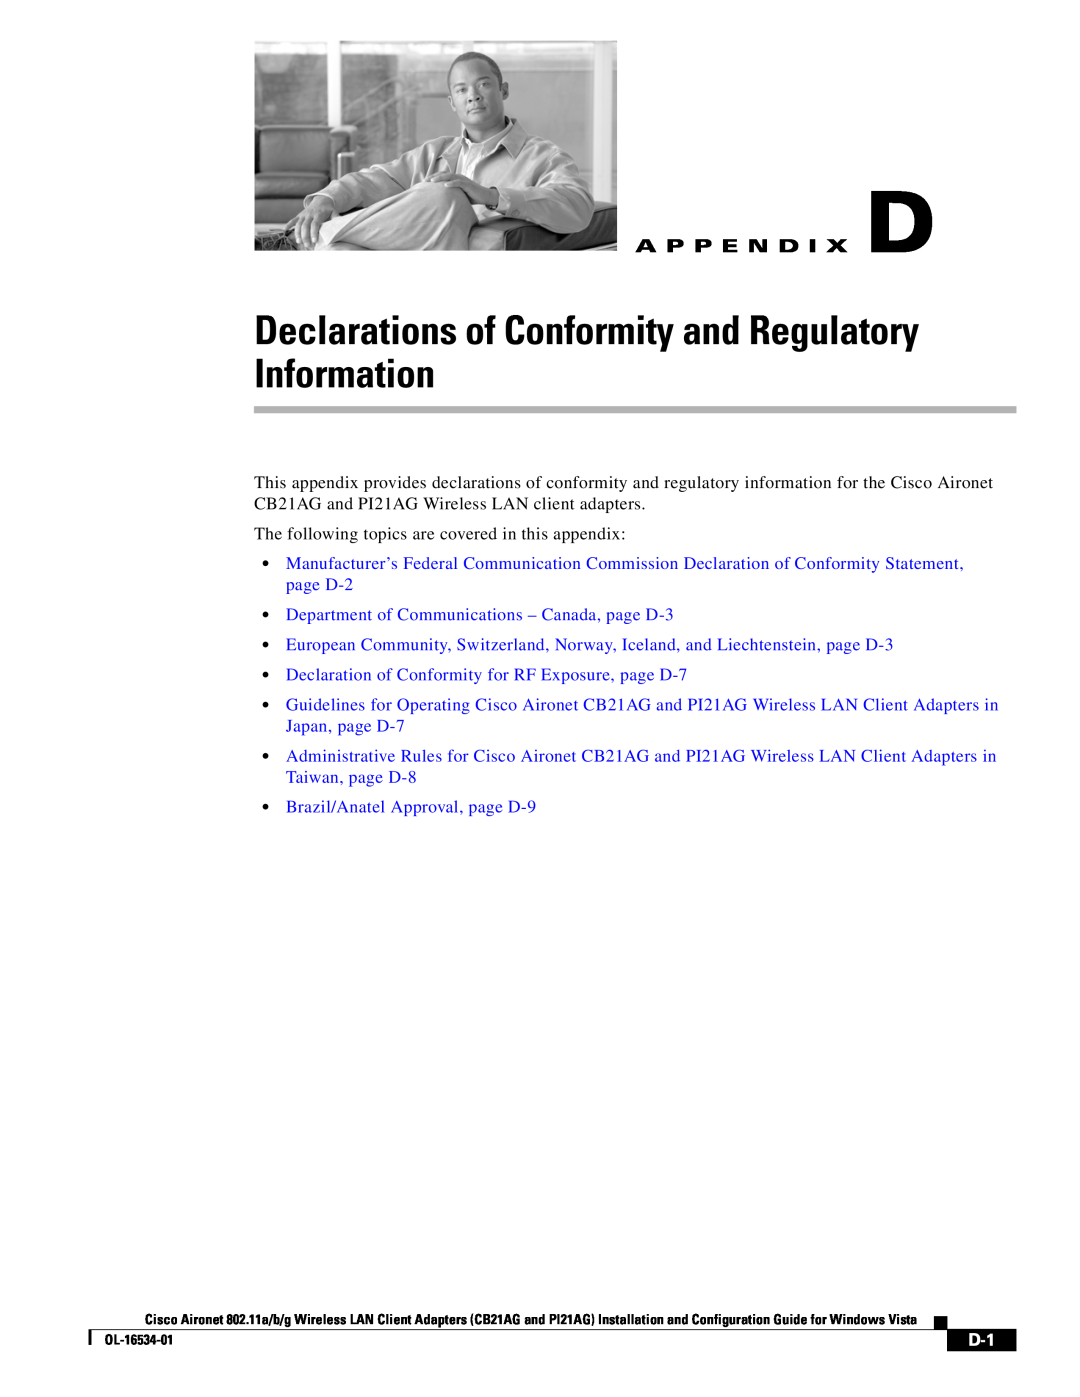 Cisco Systems CB21AG, PI21AG manual Declarations of Conformity and Regulatory Information, A P P E N D I X D 